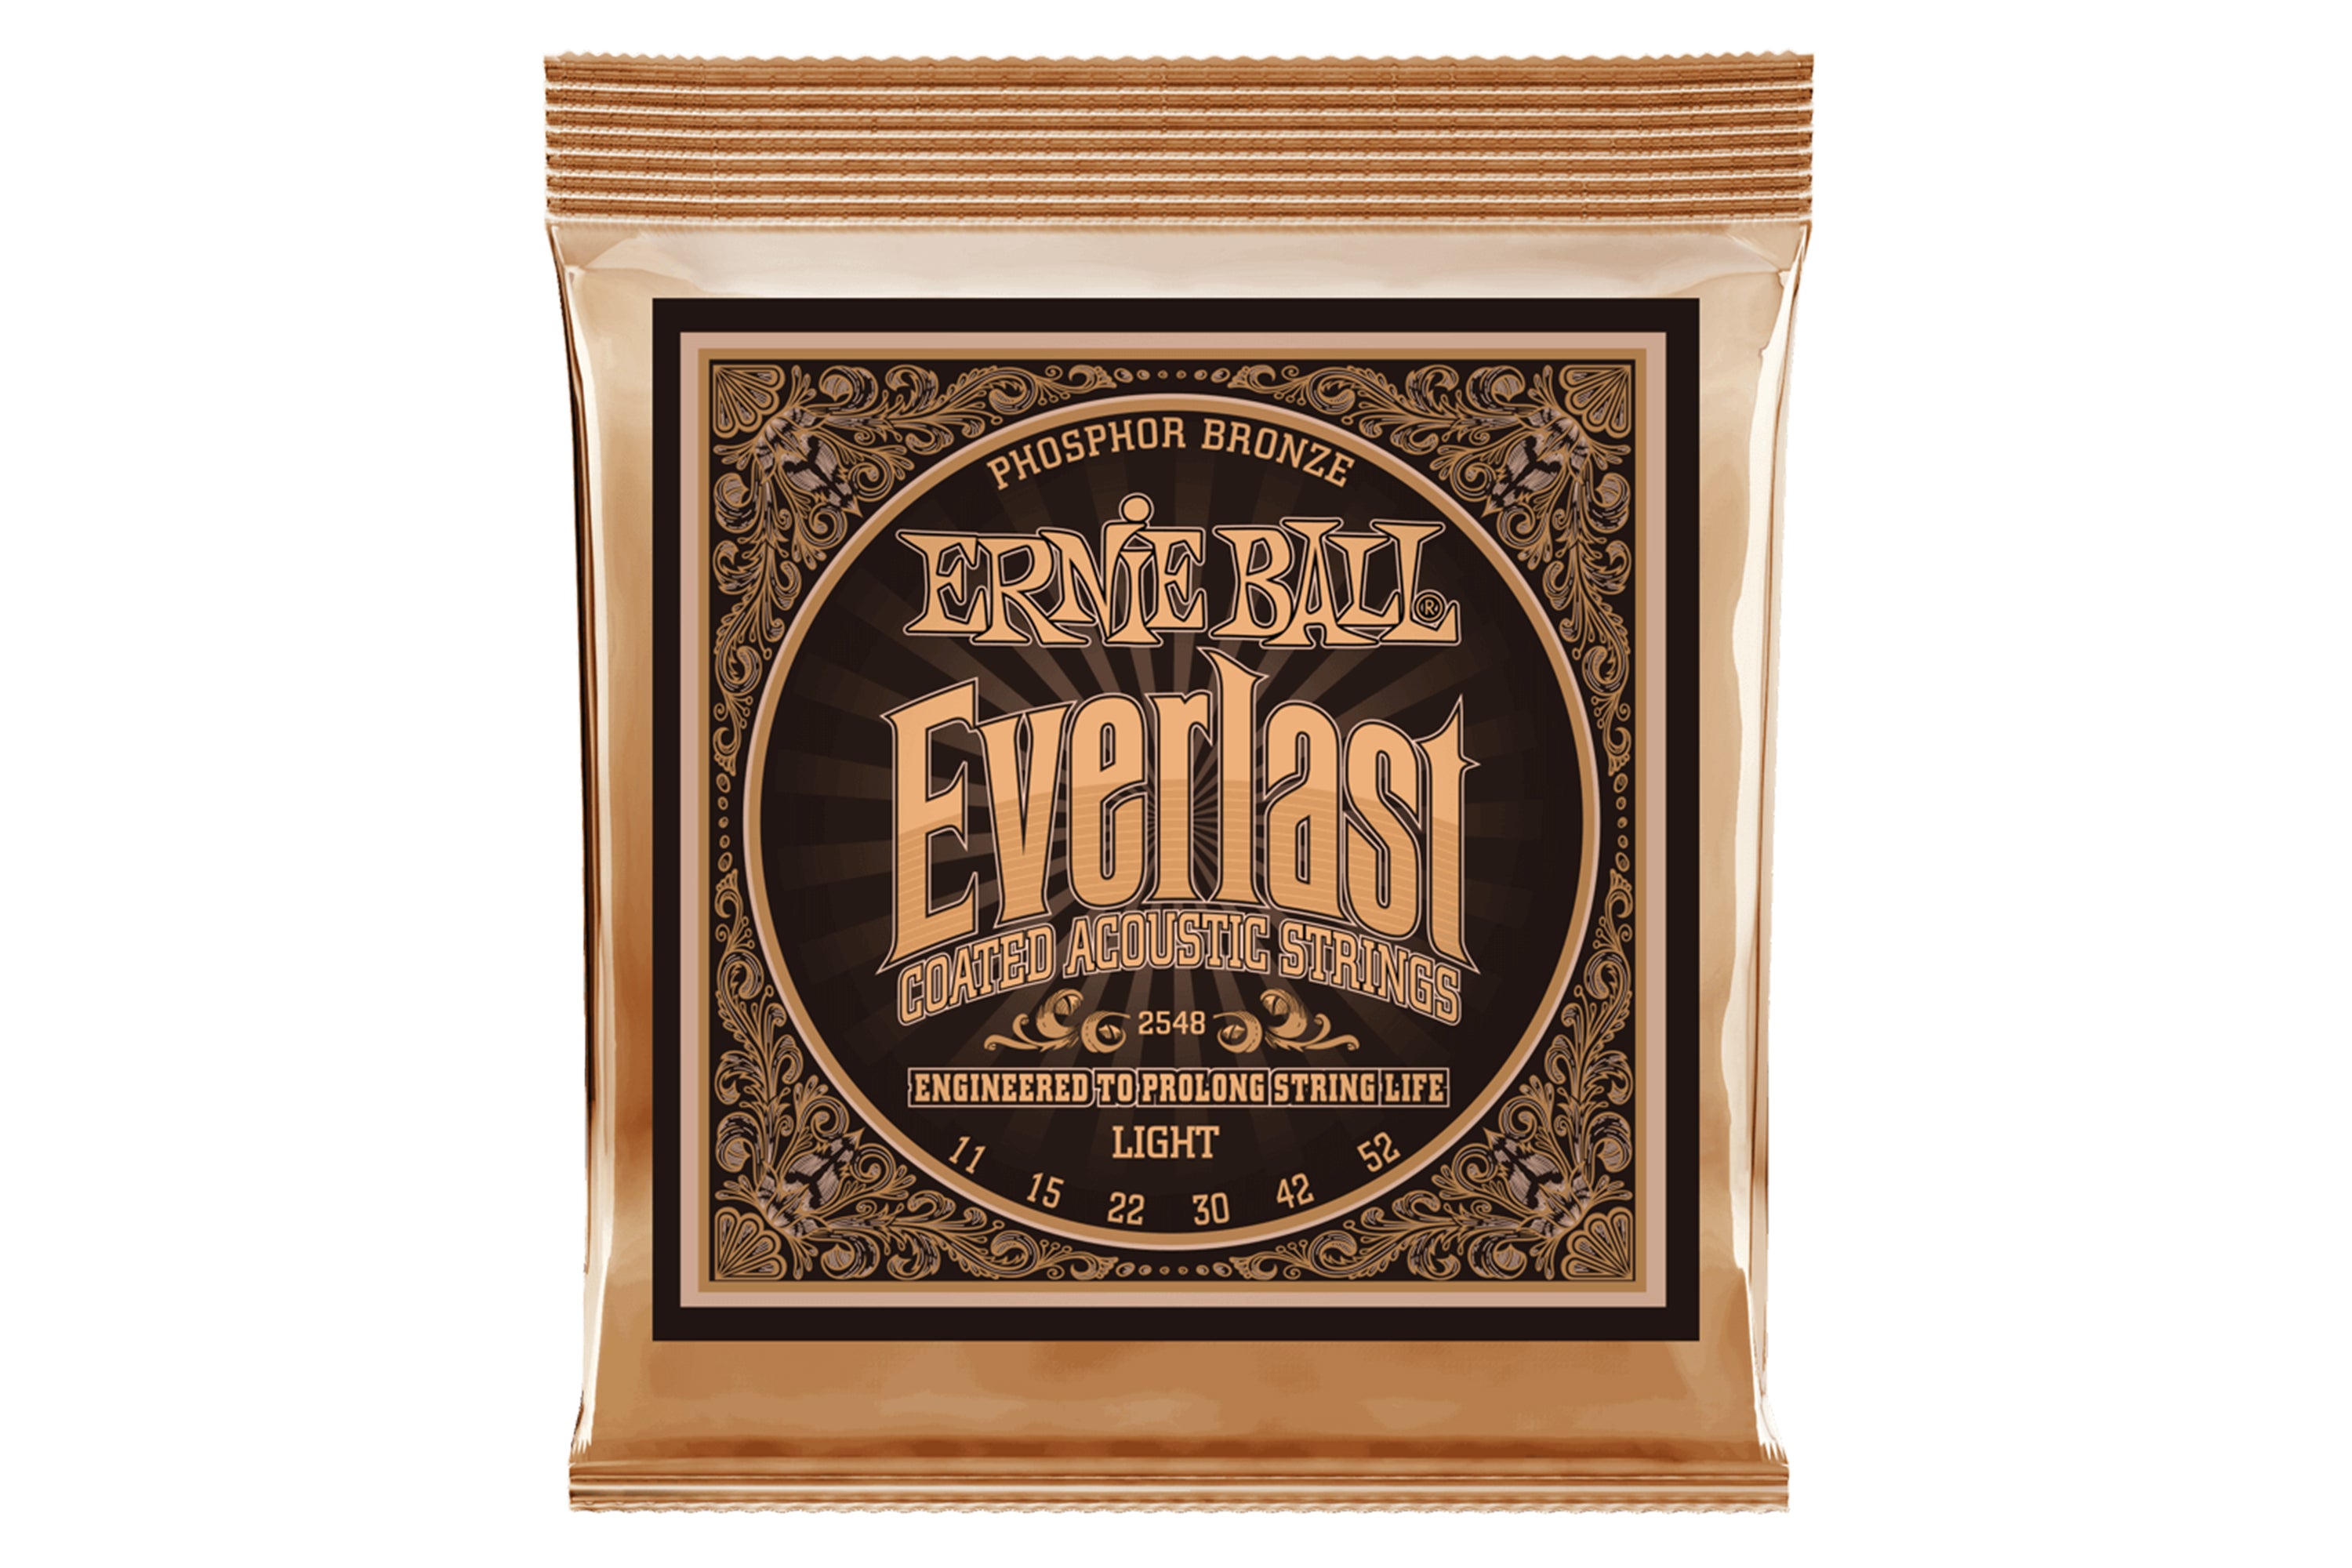 Ernie Ball Everlast Light Coated Phosphor Bronze Acoustic Guitar Strings - 11-52 GAUGE